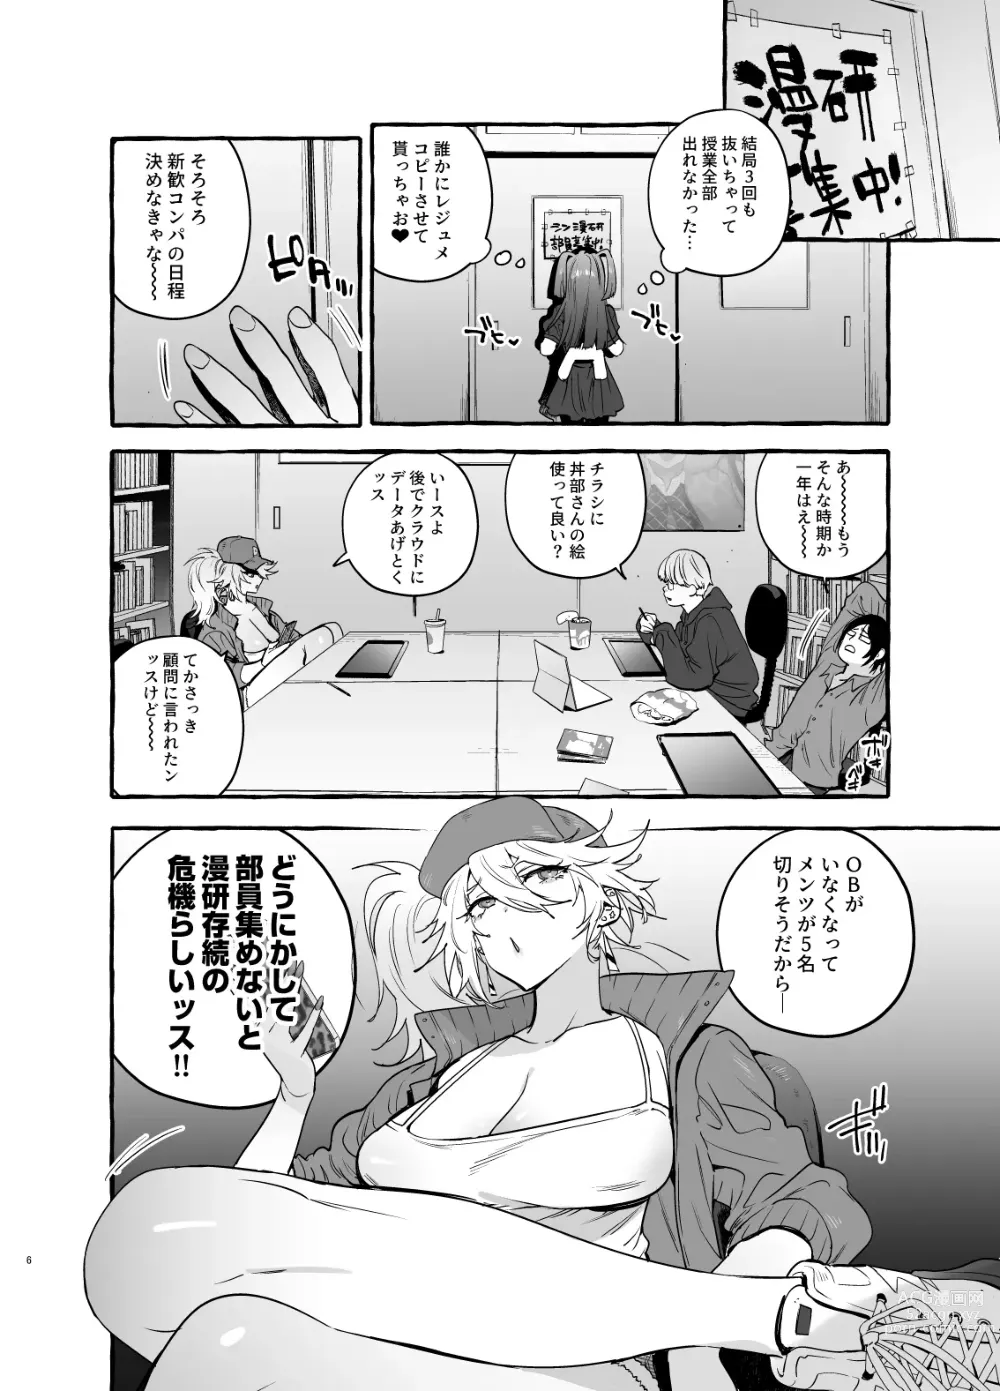 Page 8 of doujinshi Wotasa no Gyaru VS Jirai Otoko